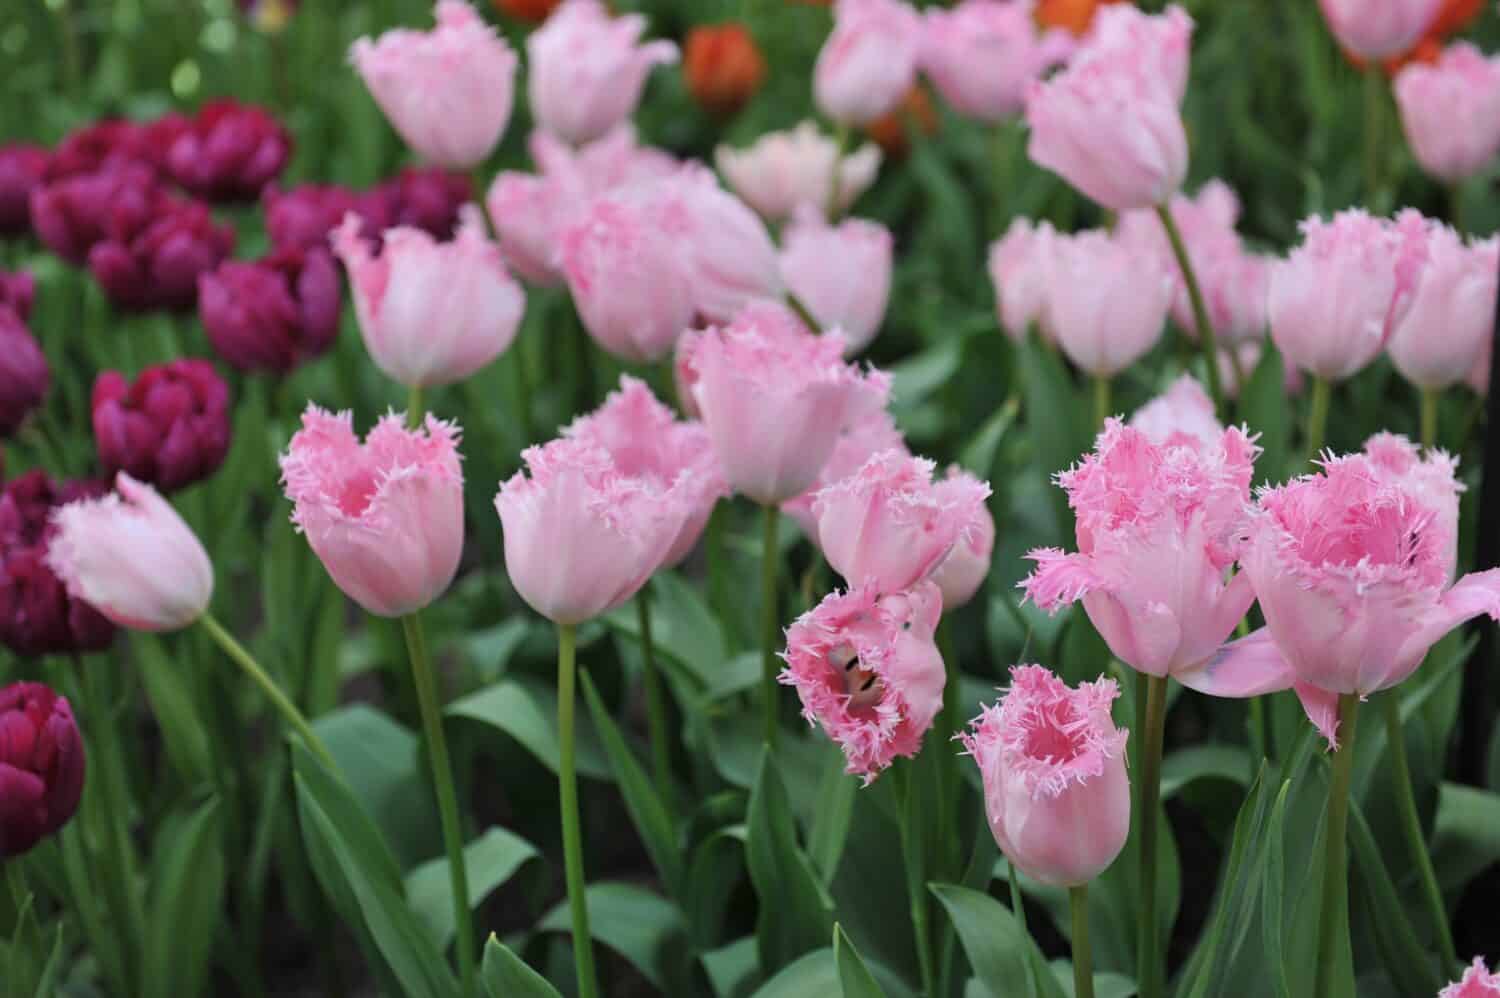 Pink fringed tulips (Tulipa) Santander bloom in a garden in April